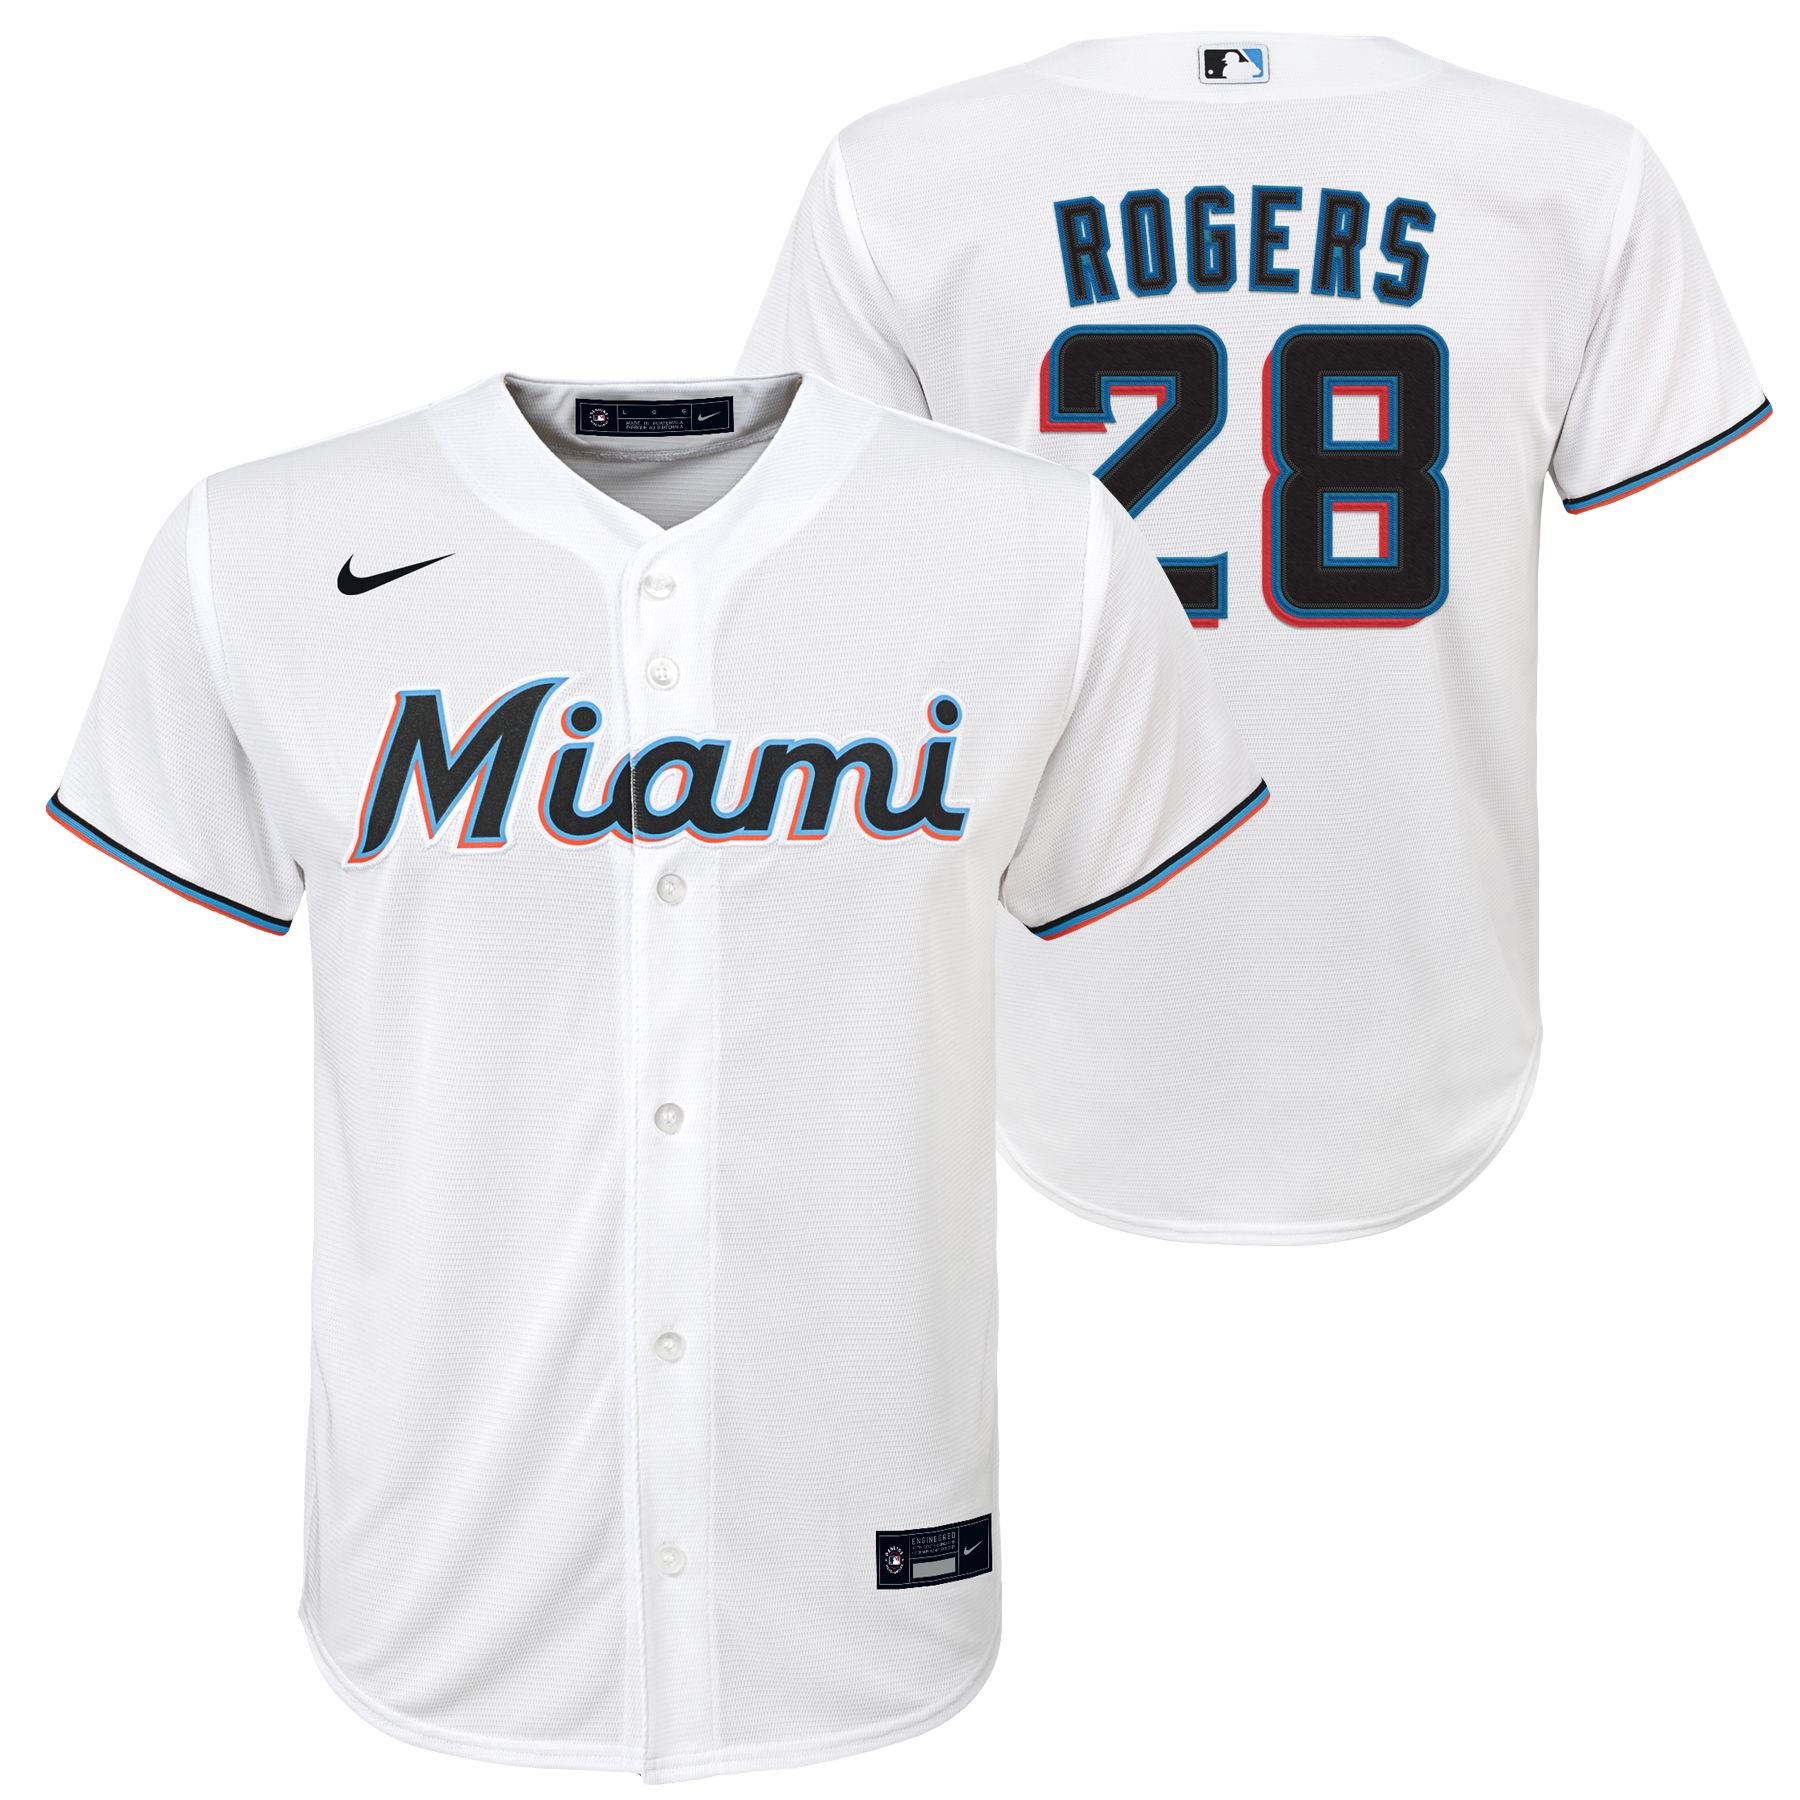 Nike / Youth Miami Marlins Trevor Rogers #28 White Replica